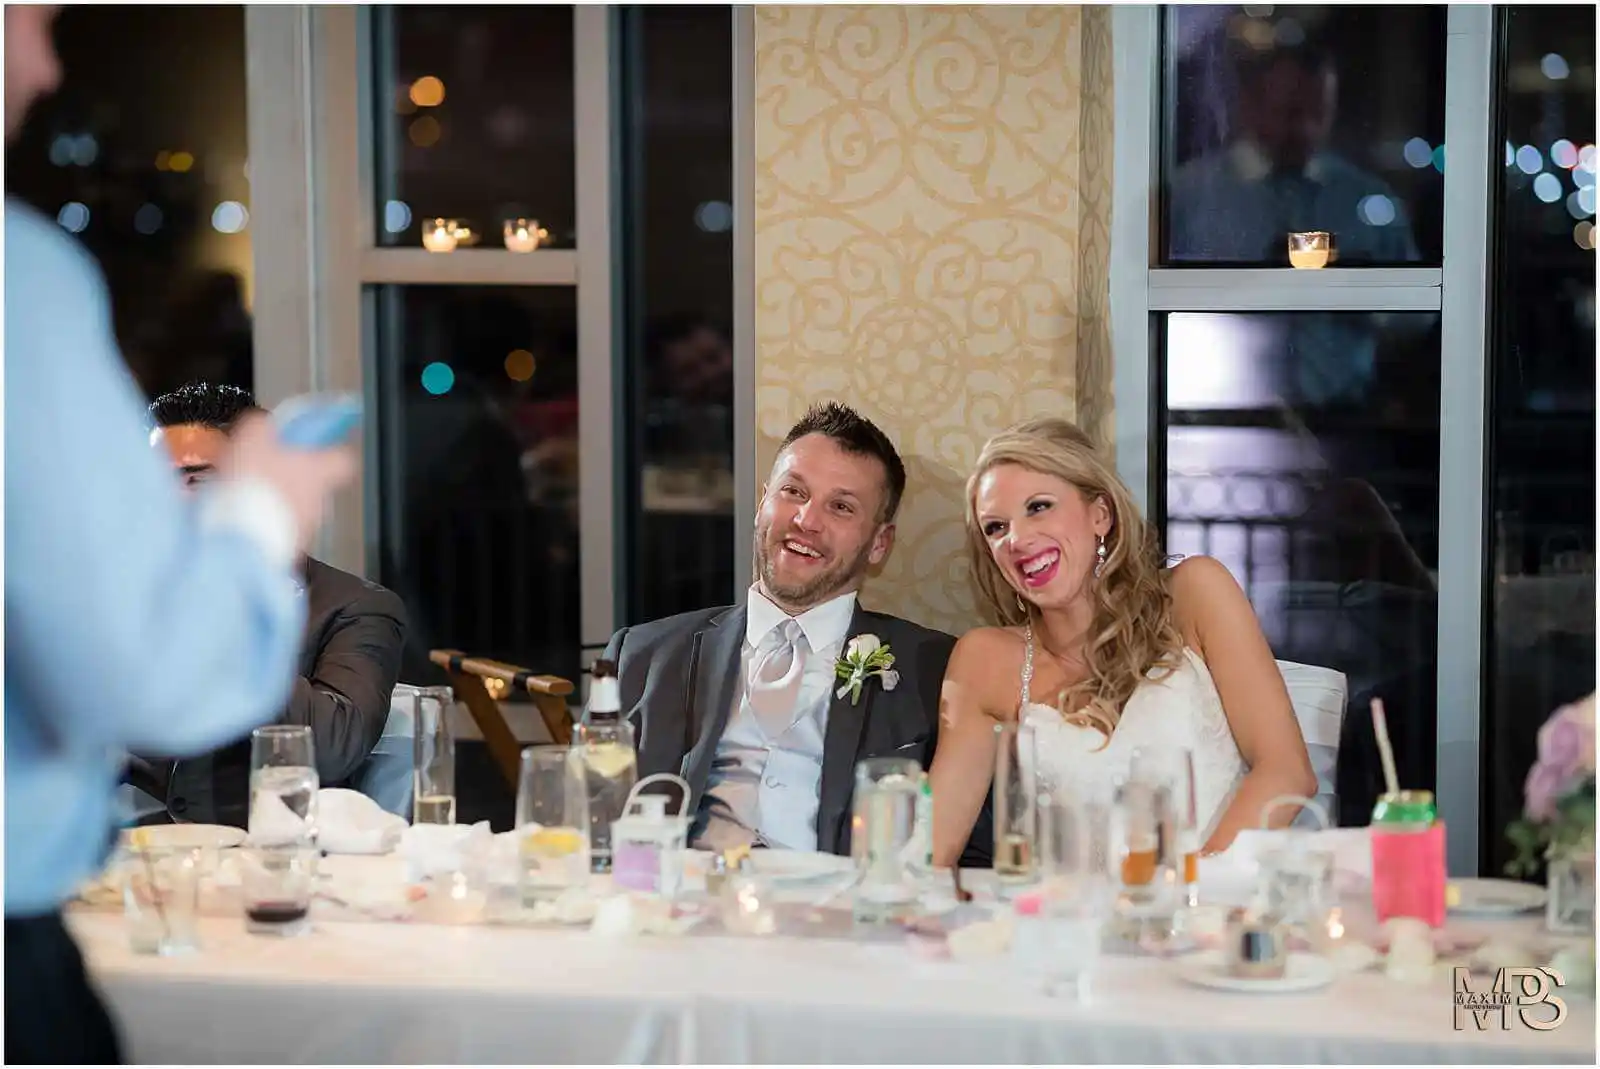 Joyful bride and groom laughing at wedding reception Marriott Rivercenter Covington KY